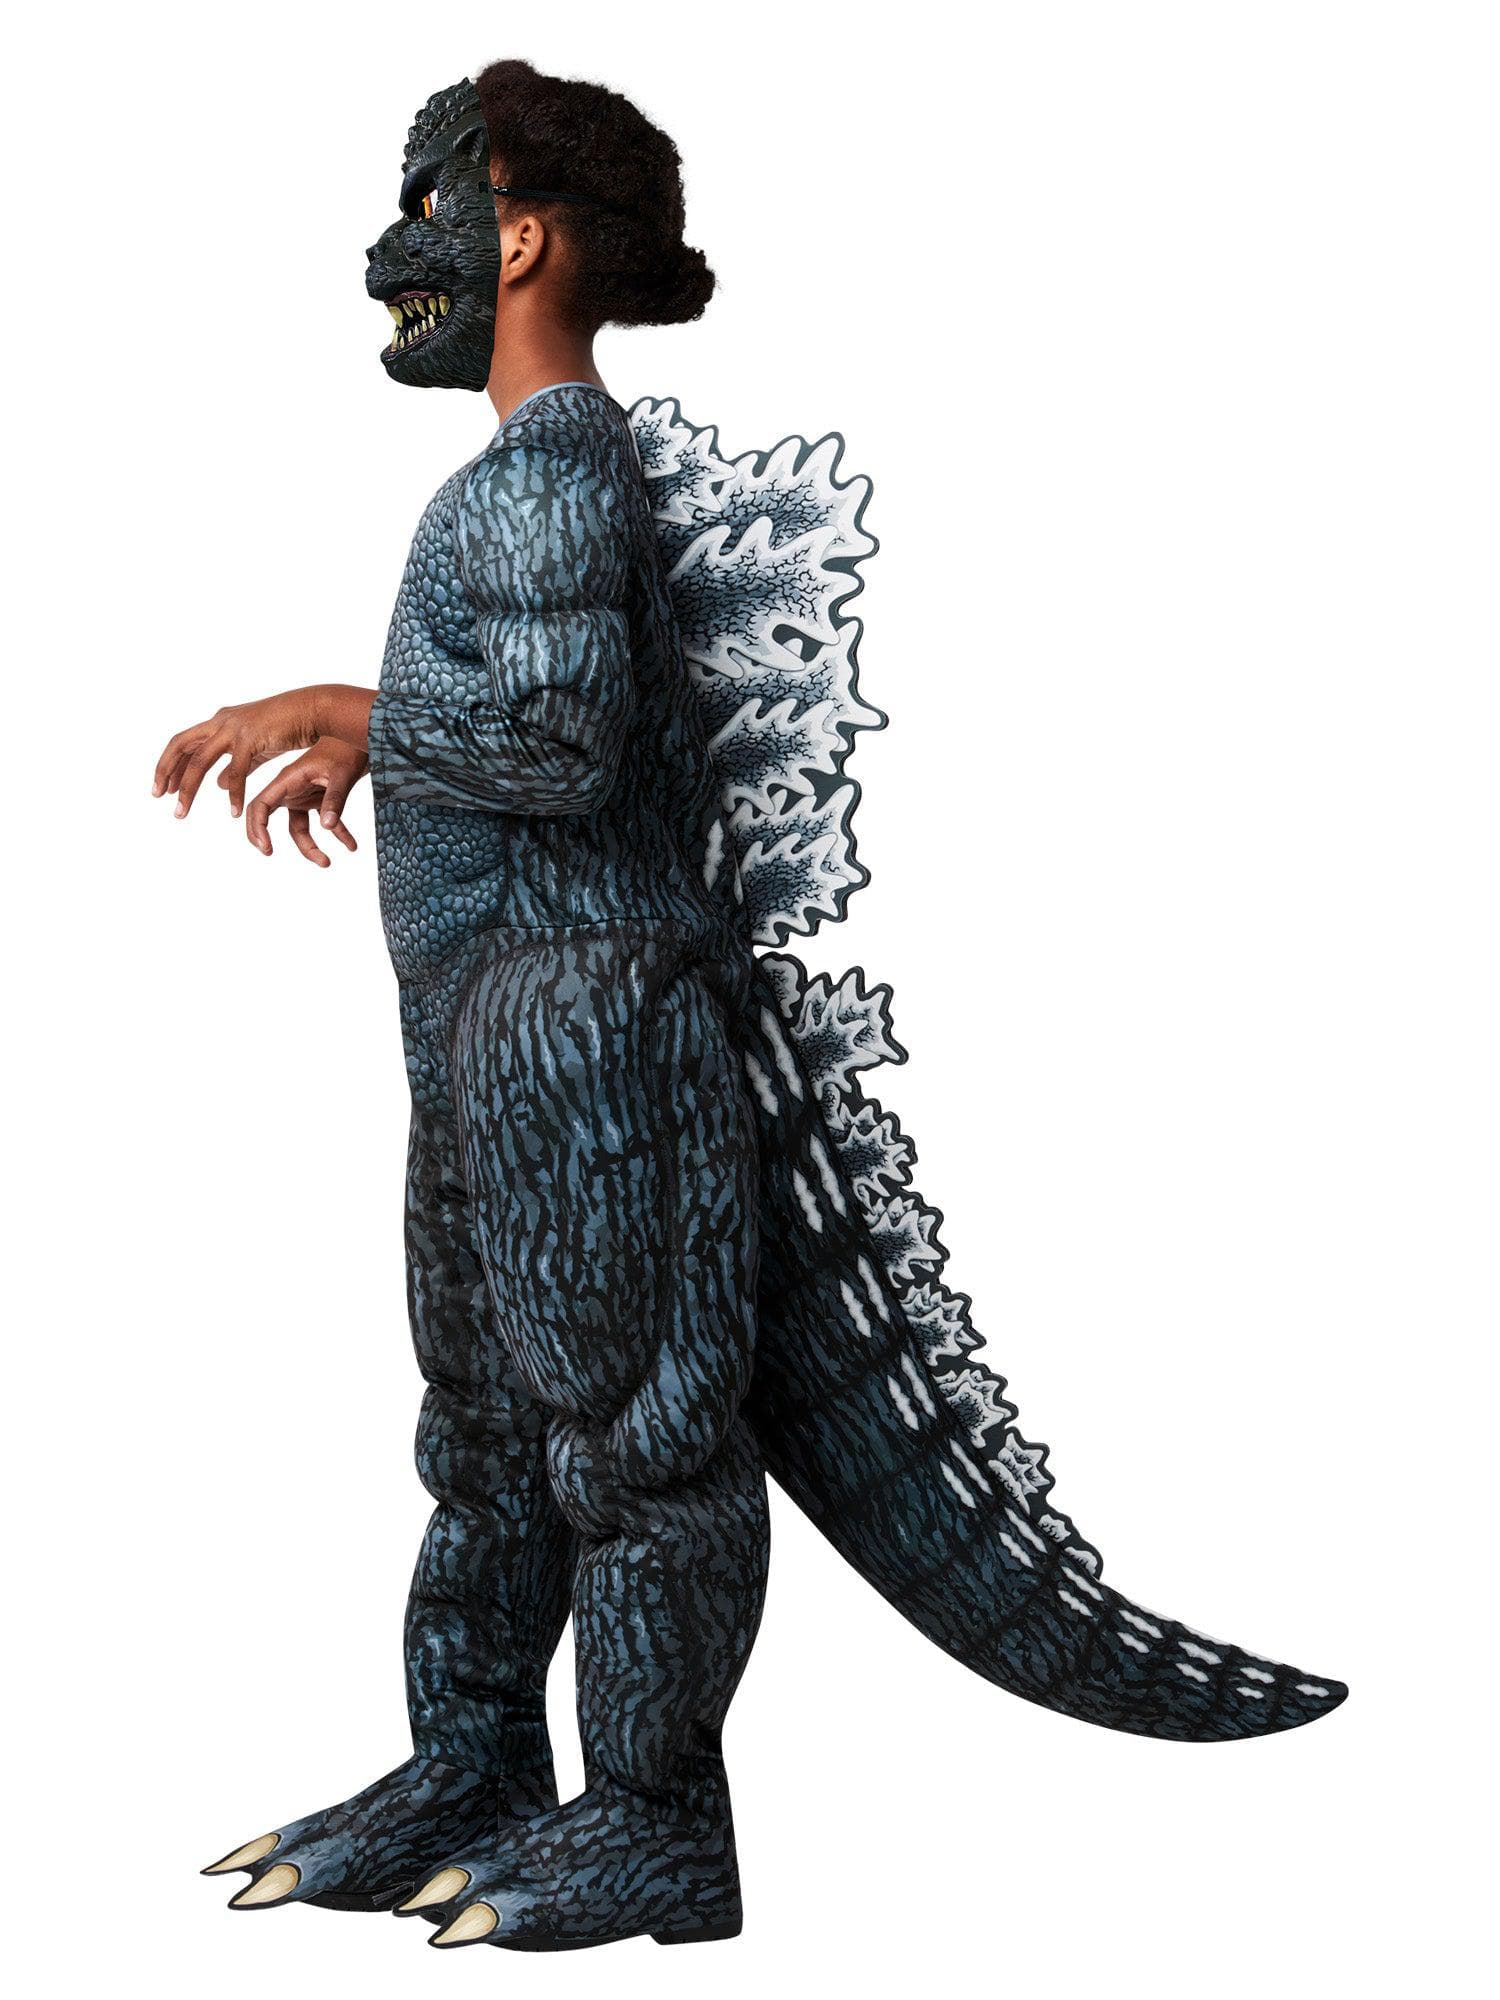 Godzilla Kids Costume - costumes.com